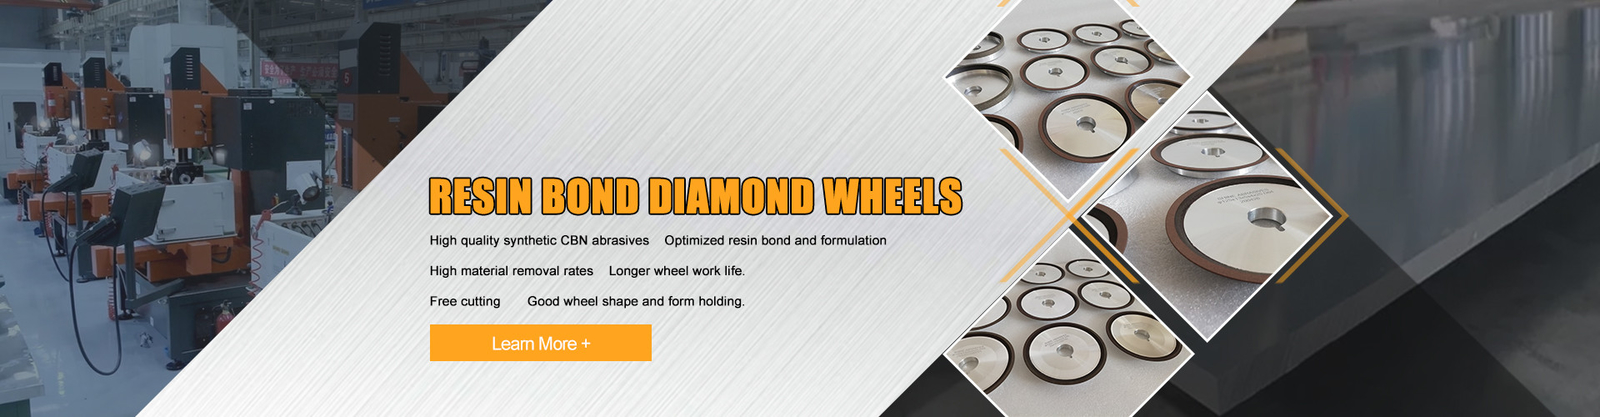 Resin Bond Diamond Wheels